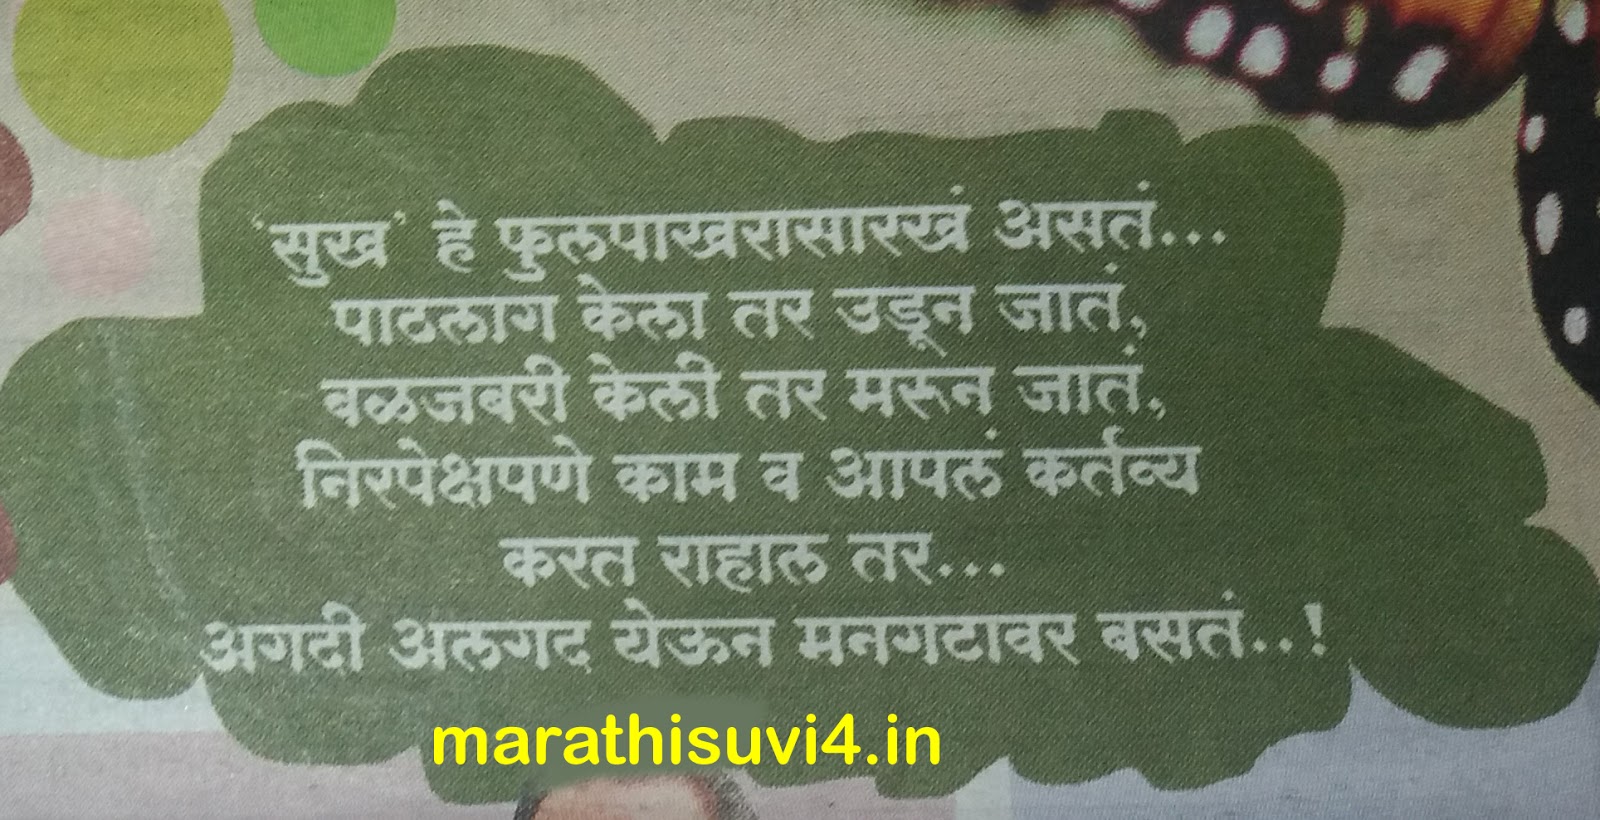 beautiful truth quotes in marathi marathi fun marathi quotes marathi suvichar marathi images quotes marathi dimond marathi truth of life